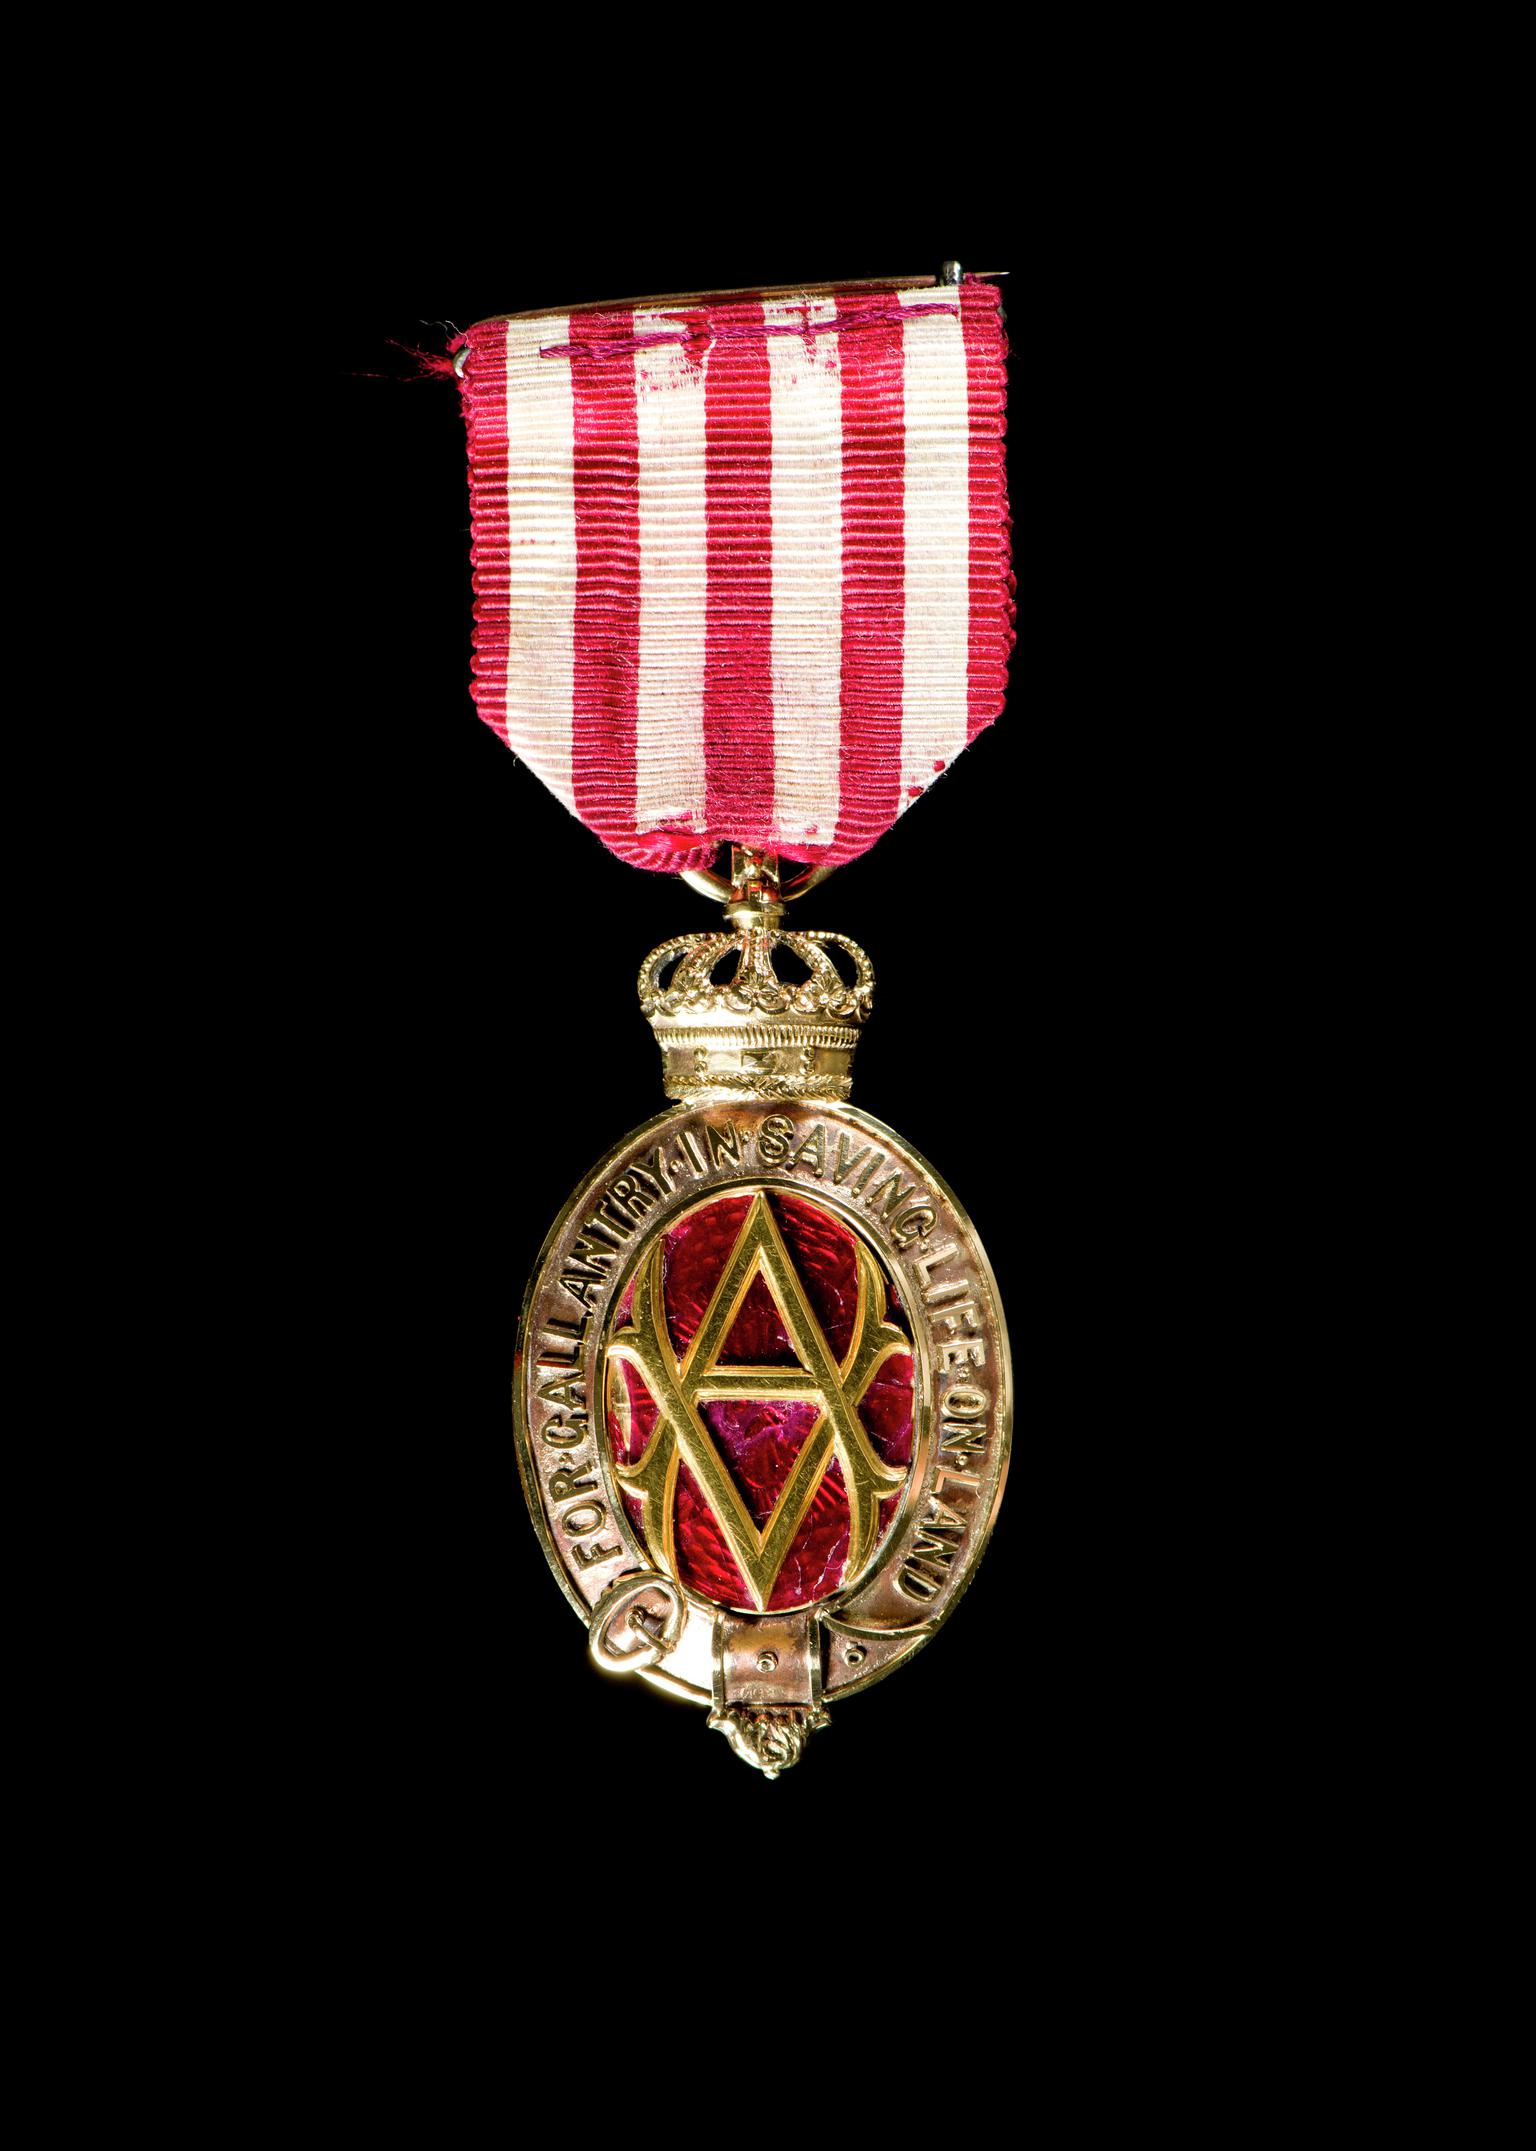 Albert Medal, gold, presented to Daniel Thomas